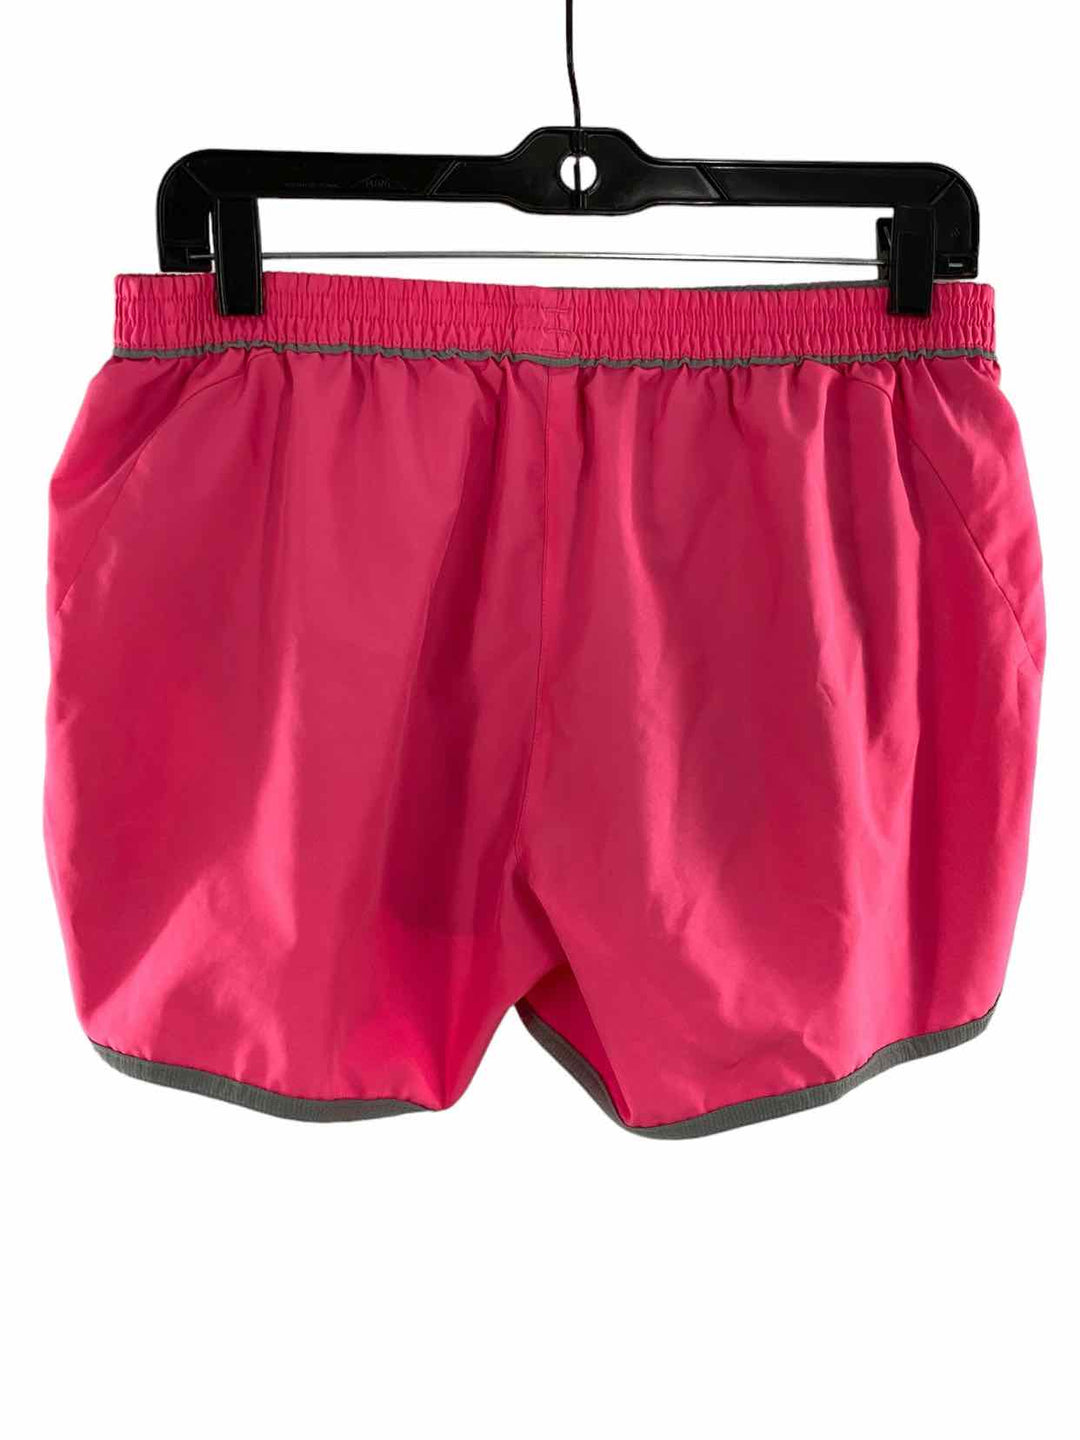 Adidas Size M Hot Pink Gray Athletic Pants